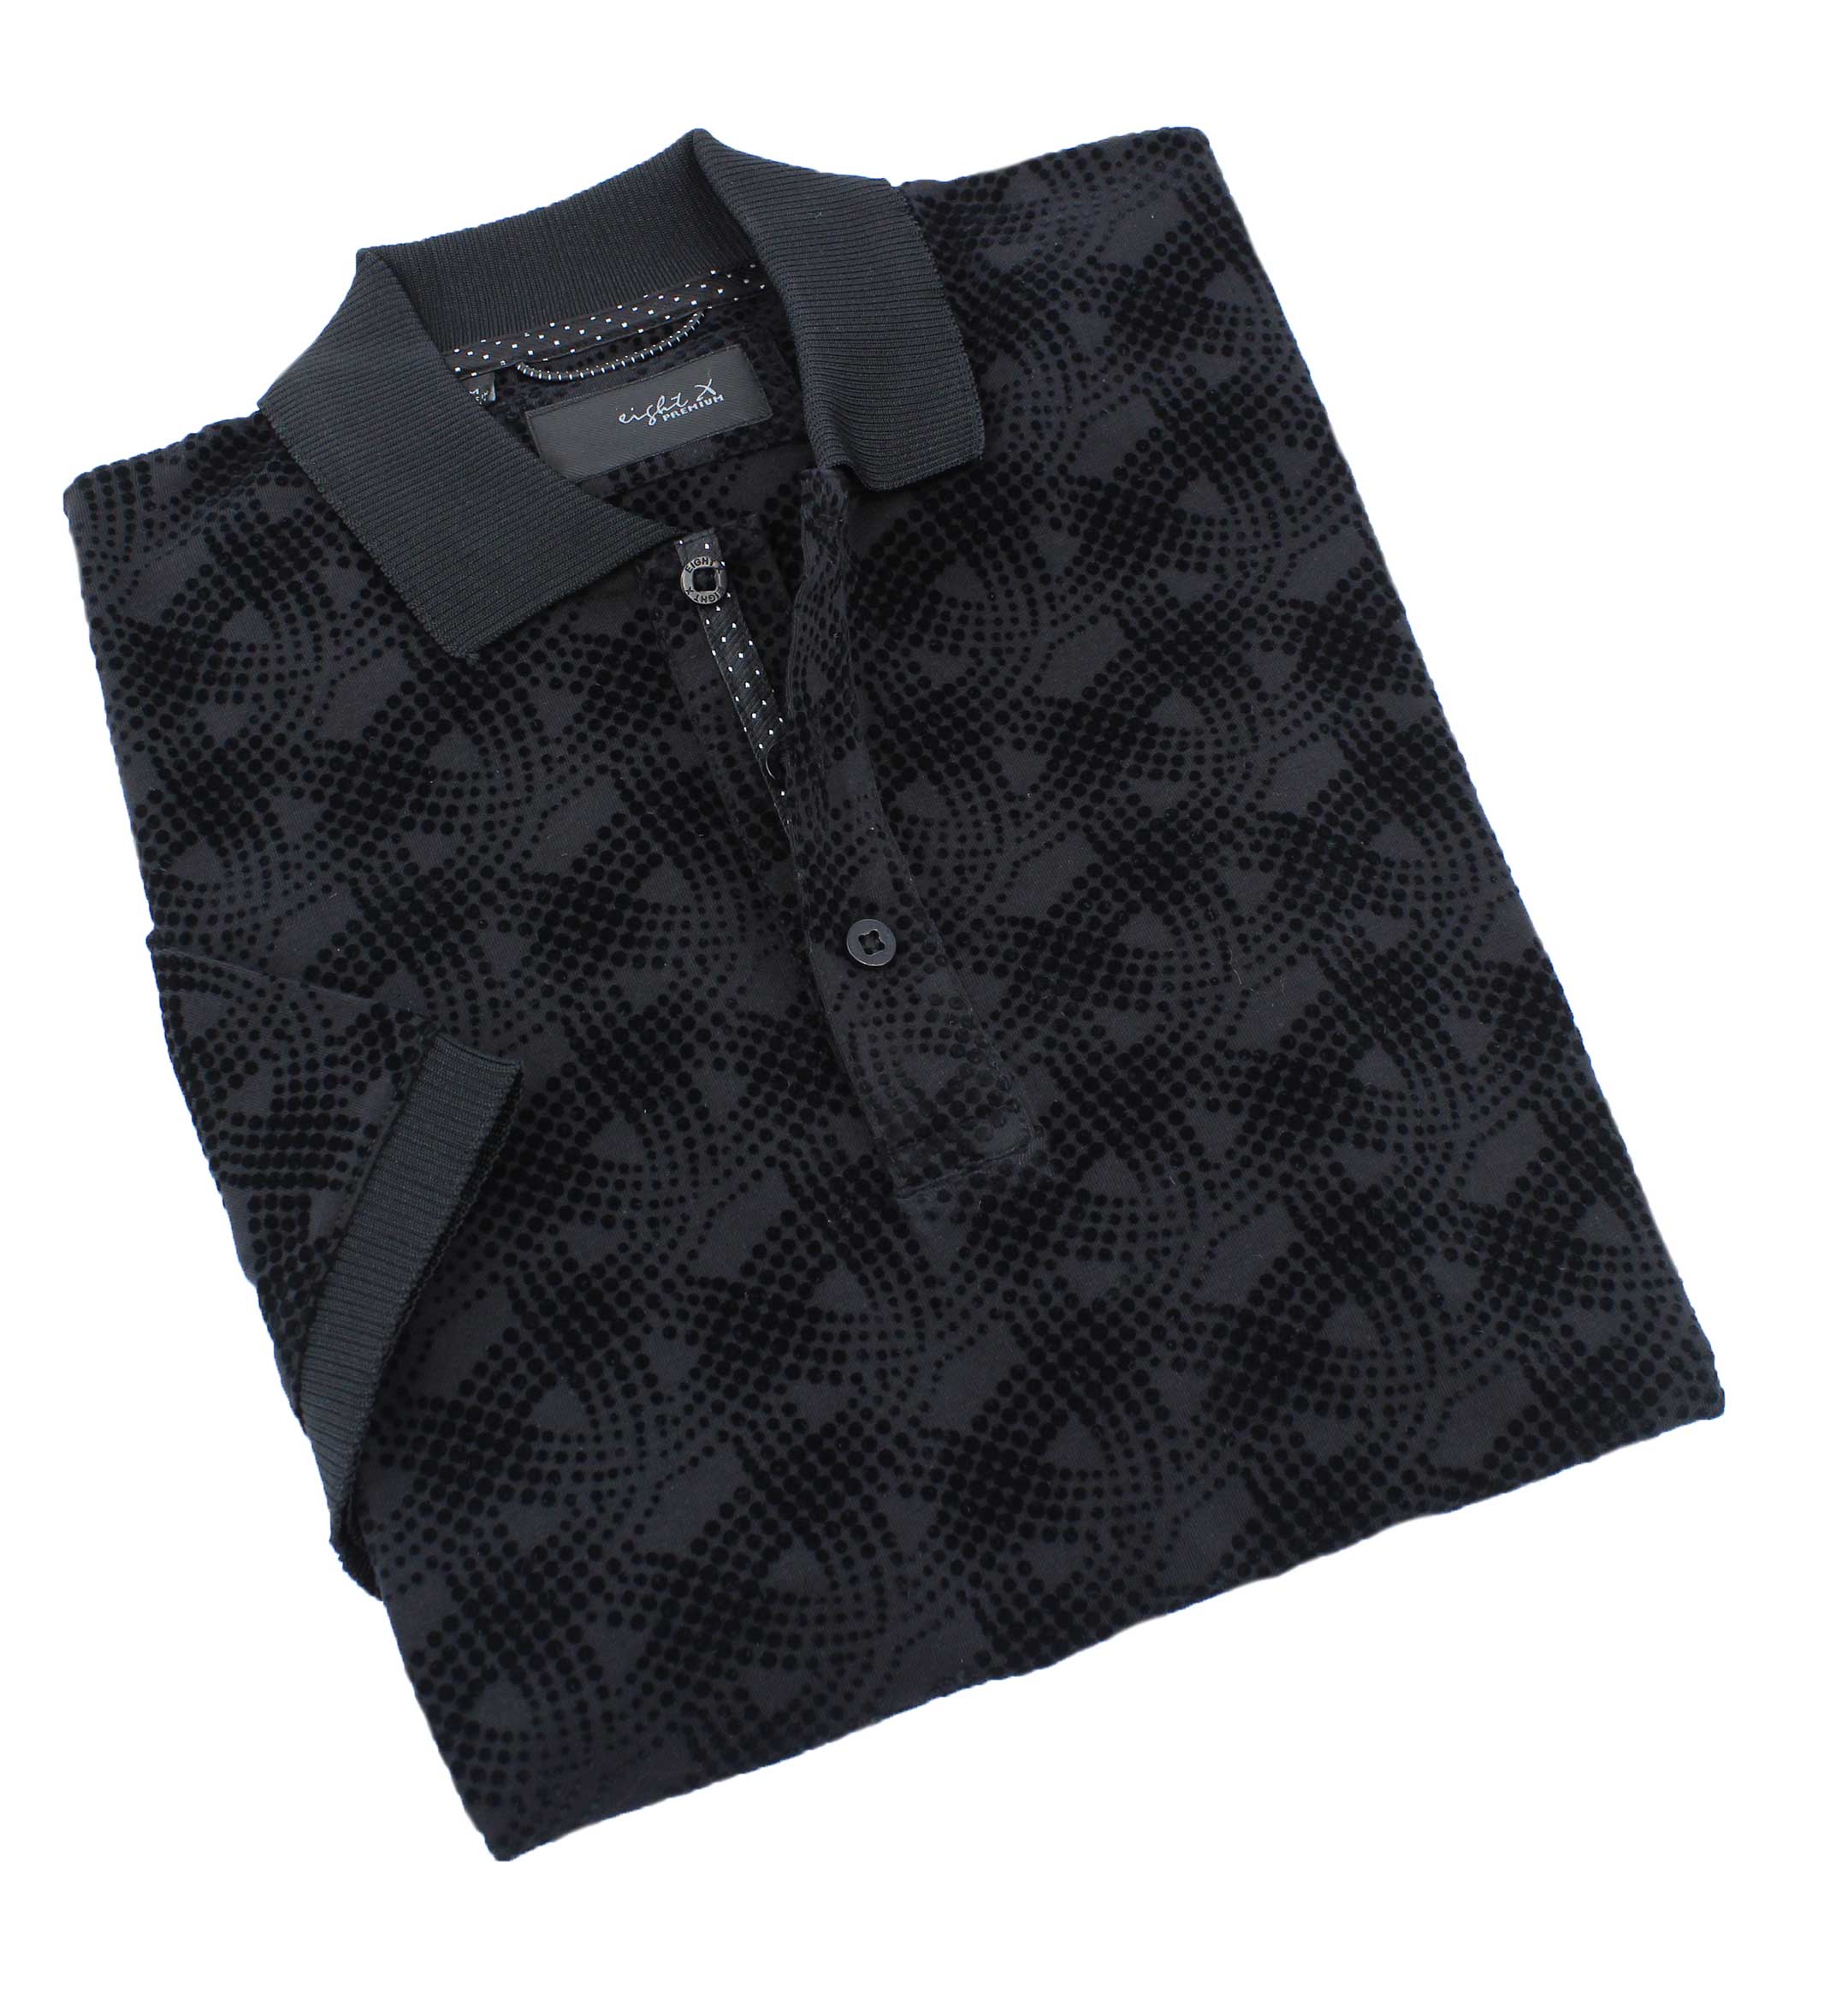 Louis Vuitton Black Luxury Brand Polo Shirt